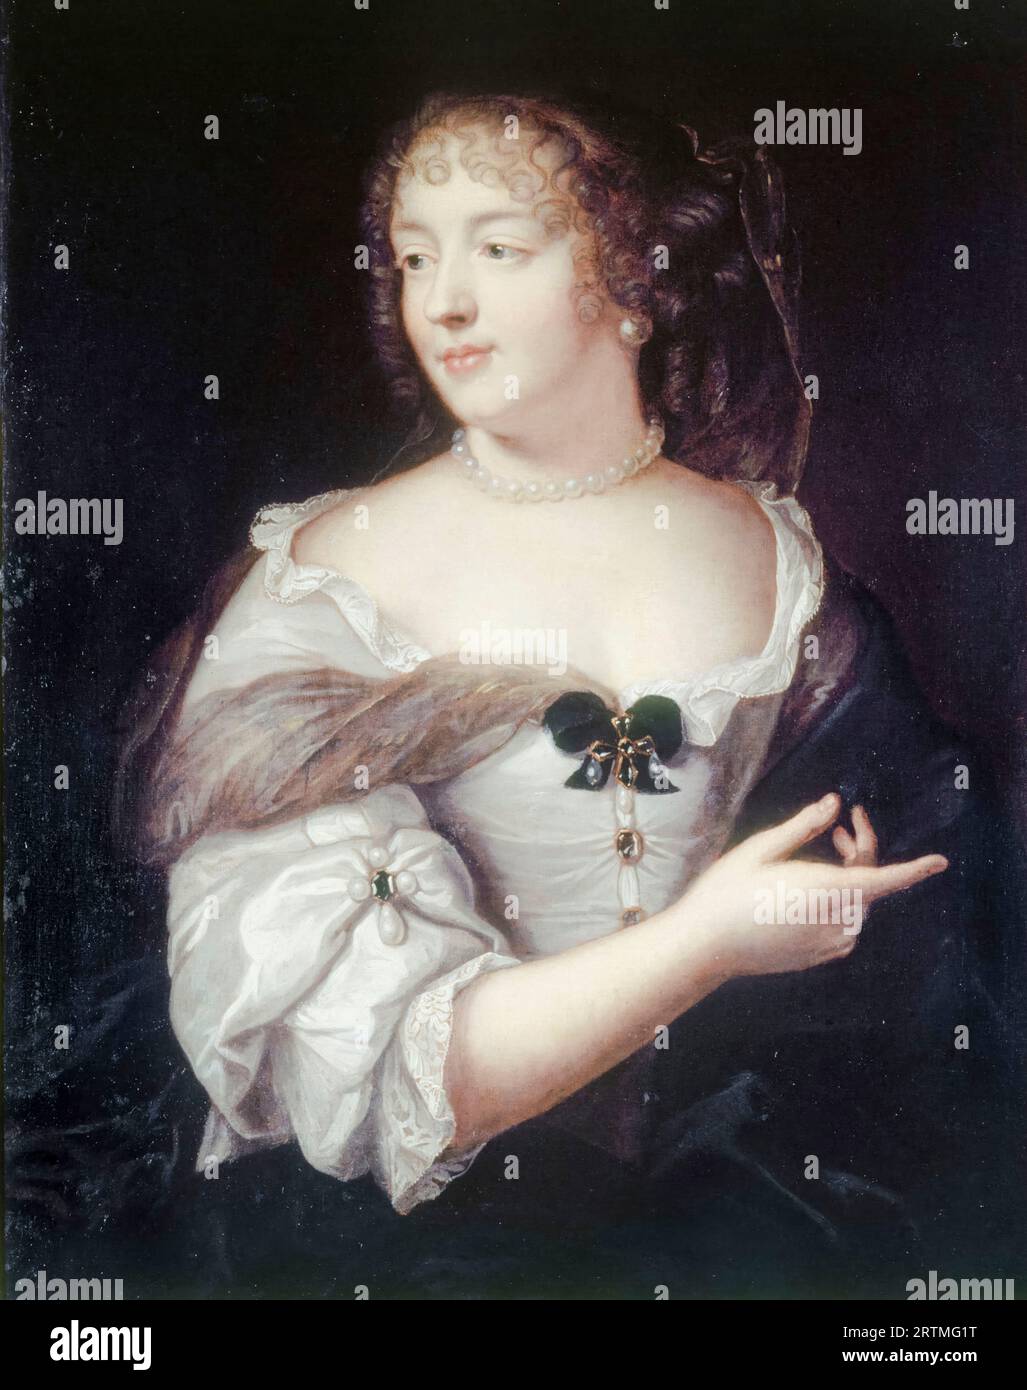 Marie de Rabutin-Chantal, marquise de Sévigné (1626-1696), called 'Madame de Sévigné' was a French aristocrat, portrait painting in oil on canvas by Claude Lefebvre (attributed to), circa 1665 Stock Photo